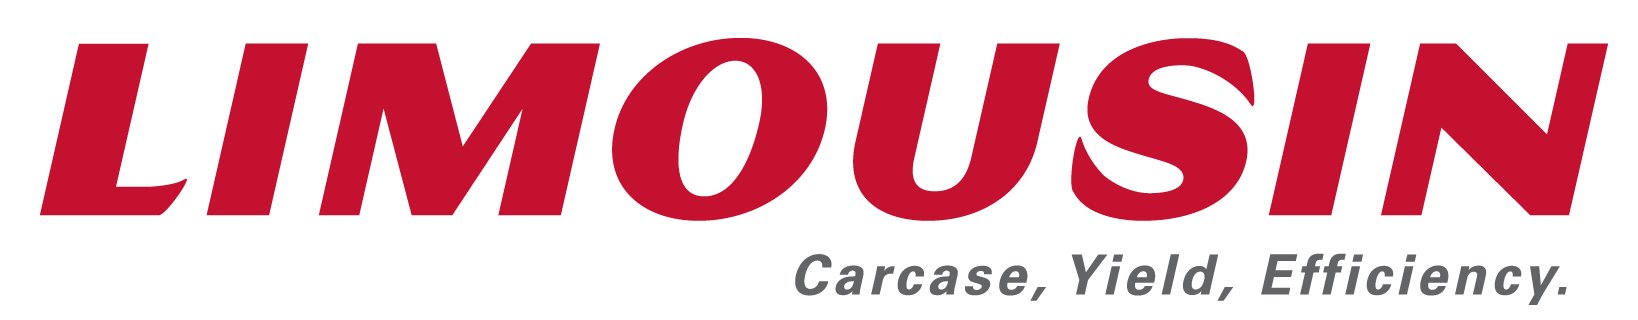 Limousin logo